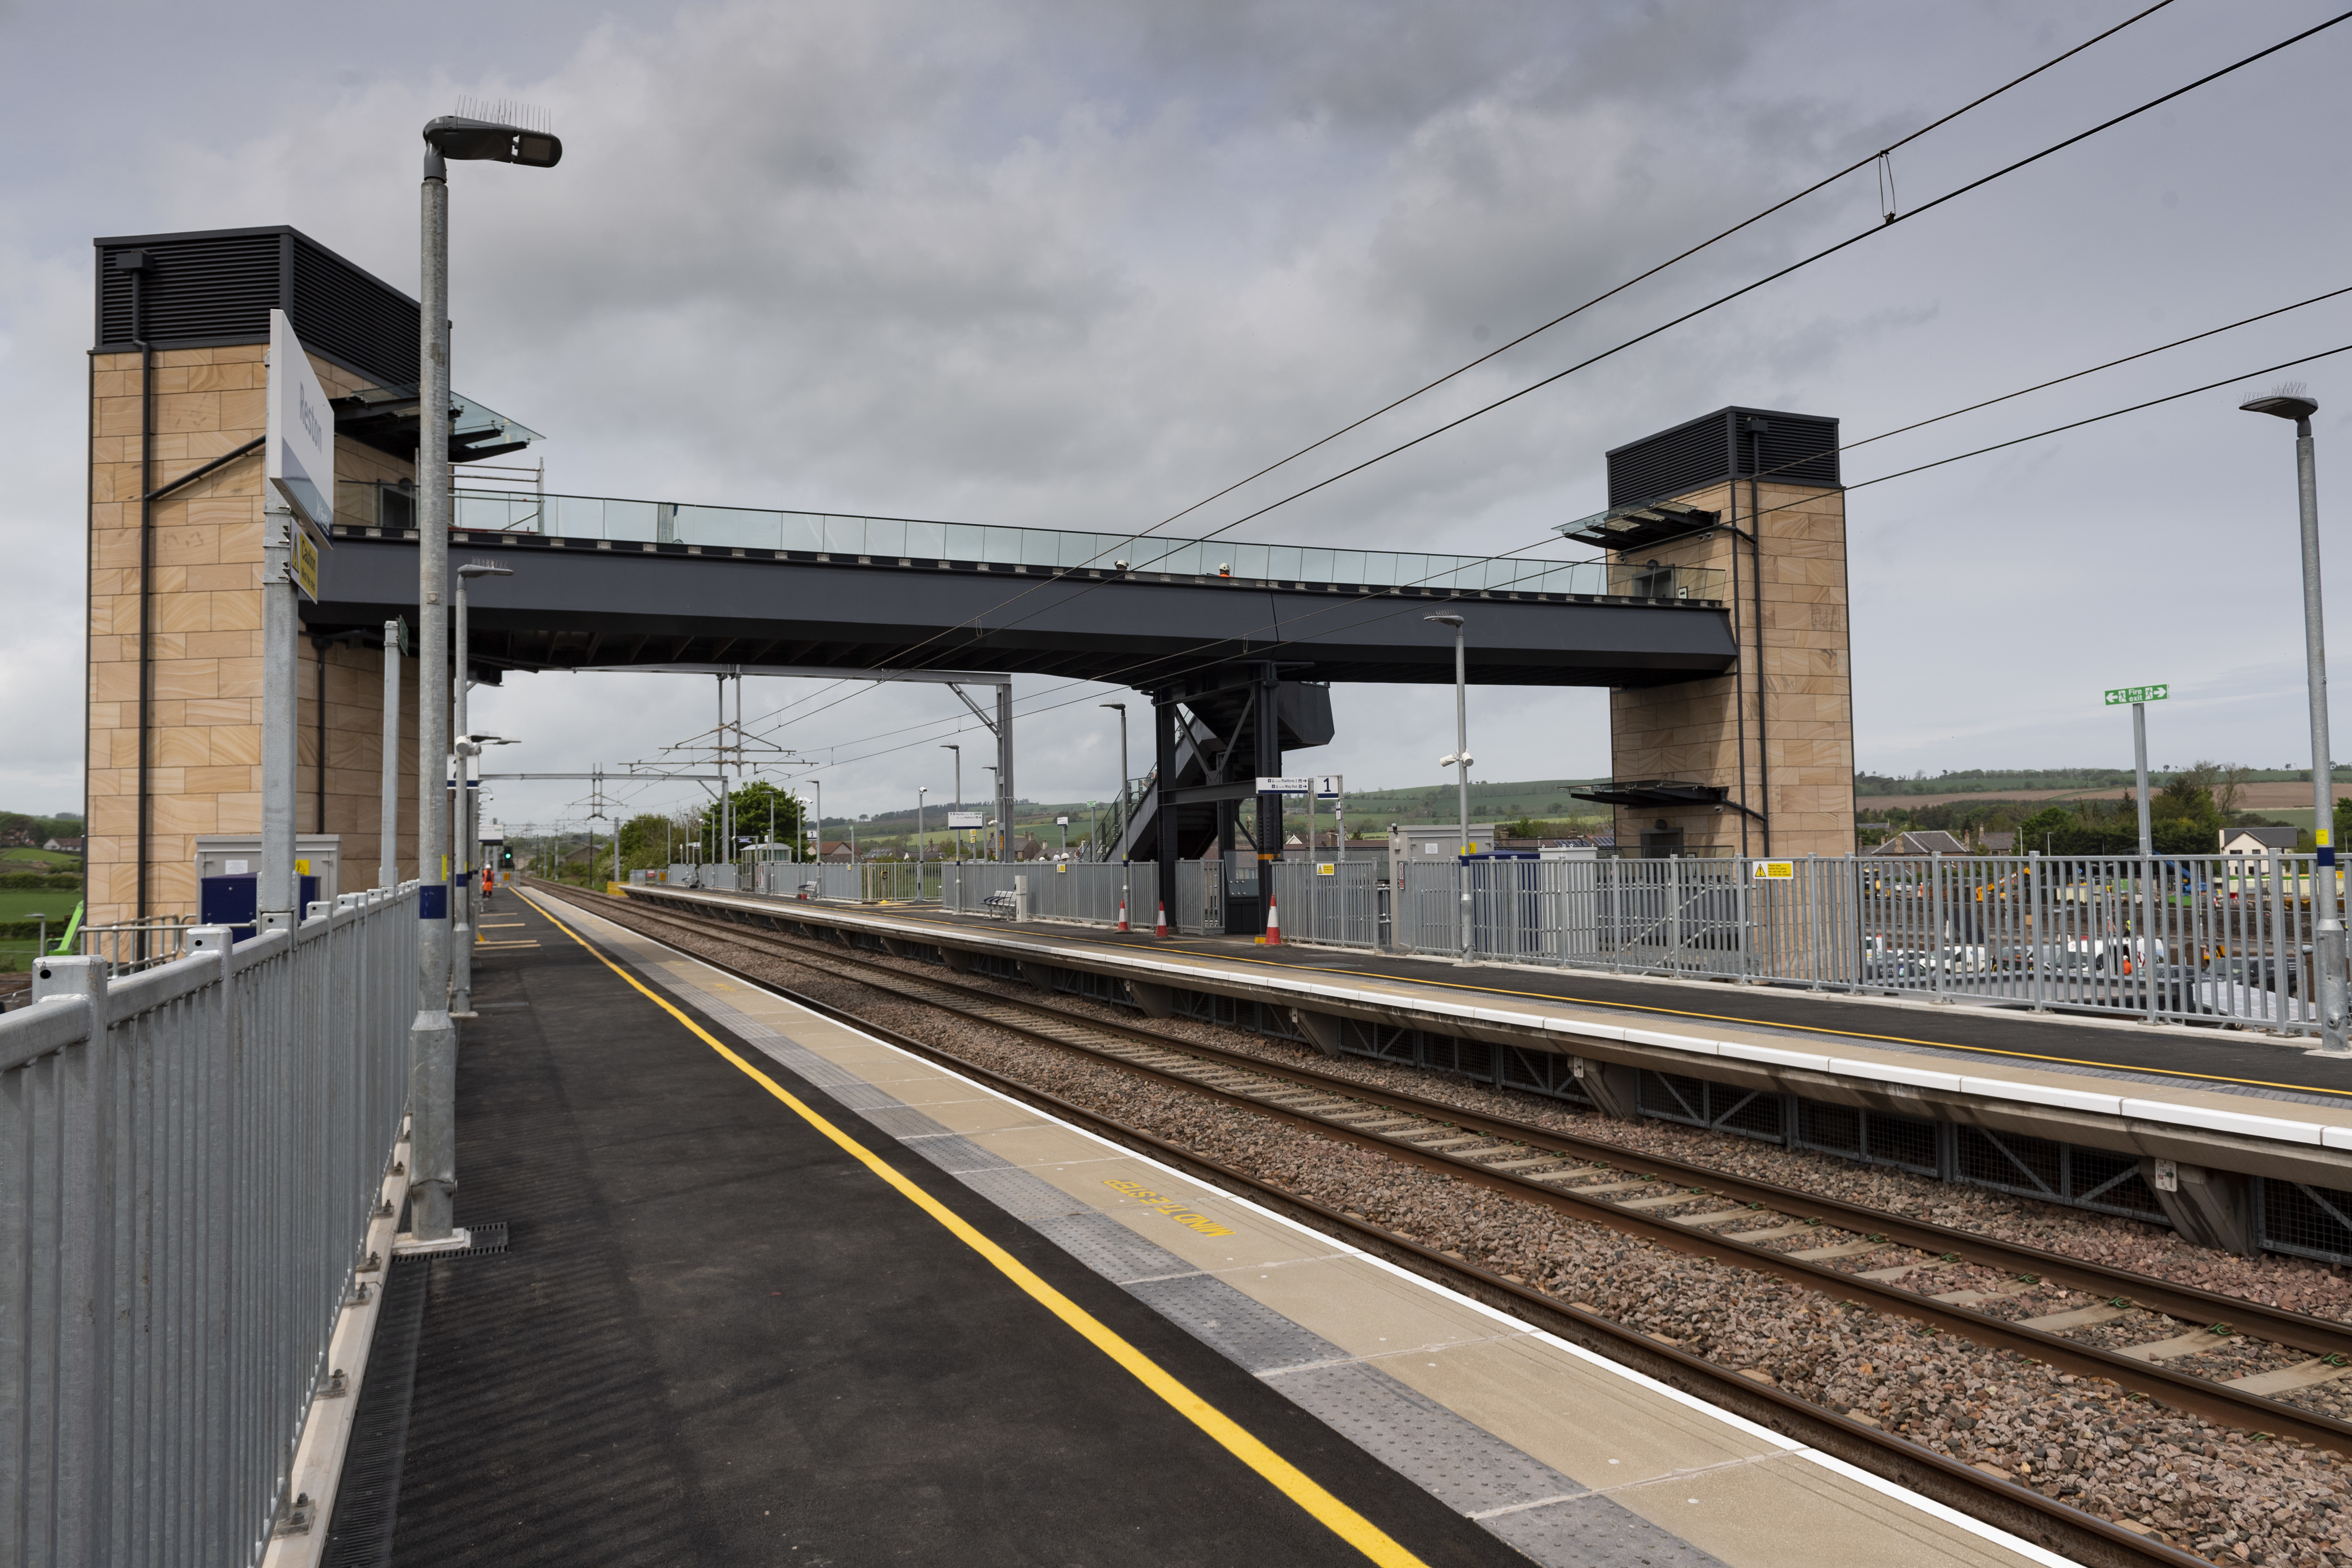 Ribbon footbridge at Reston station